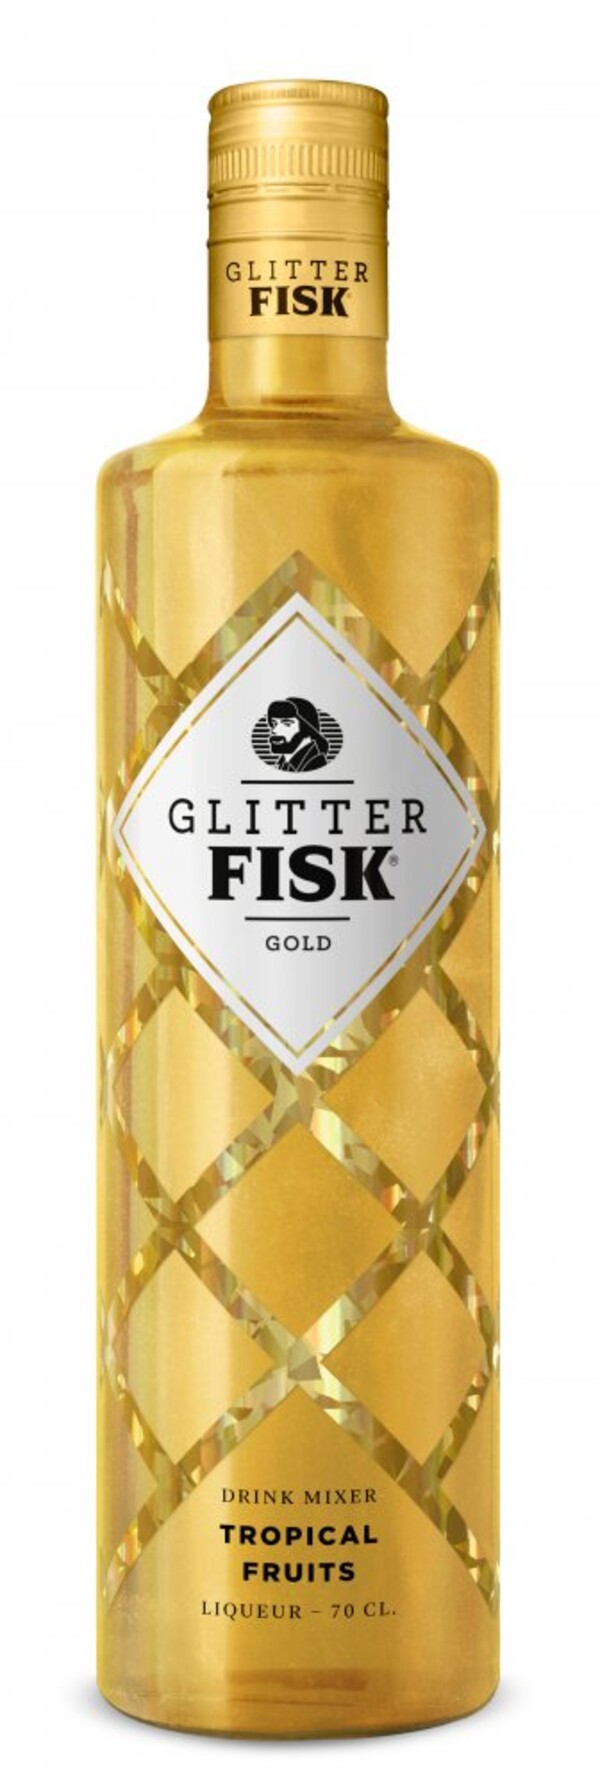 Fisk Glitter Gold